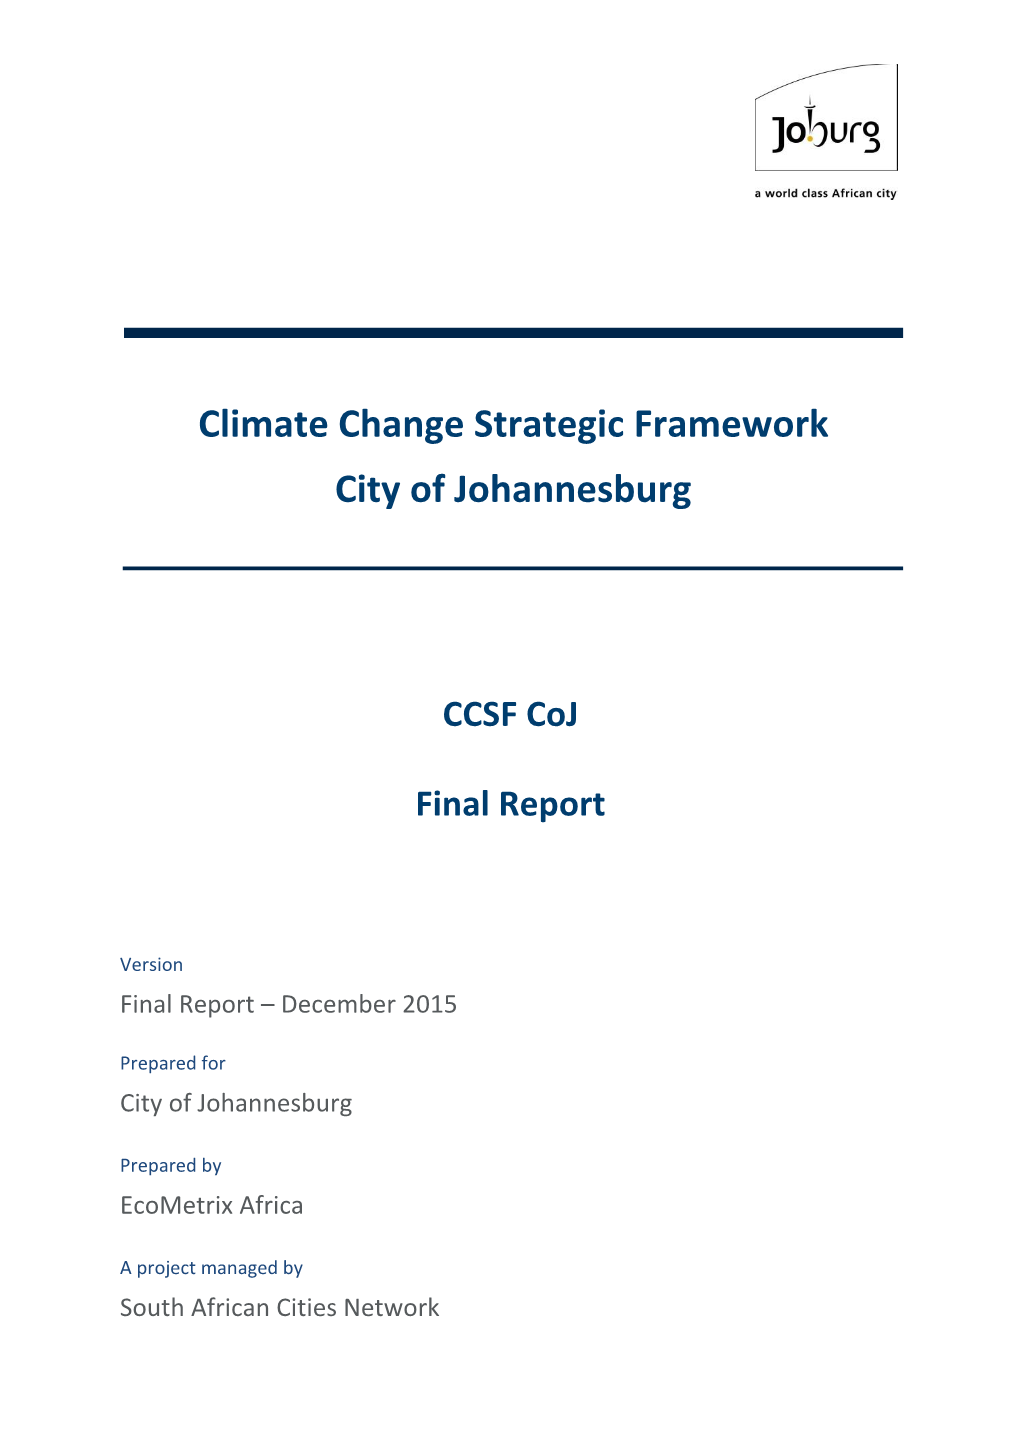 Climate Change Strategic Framework City of Johannesburg